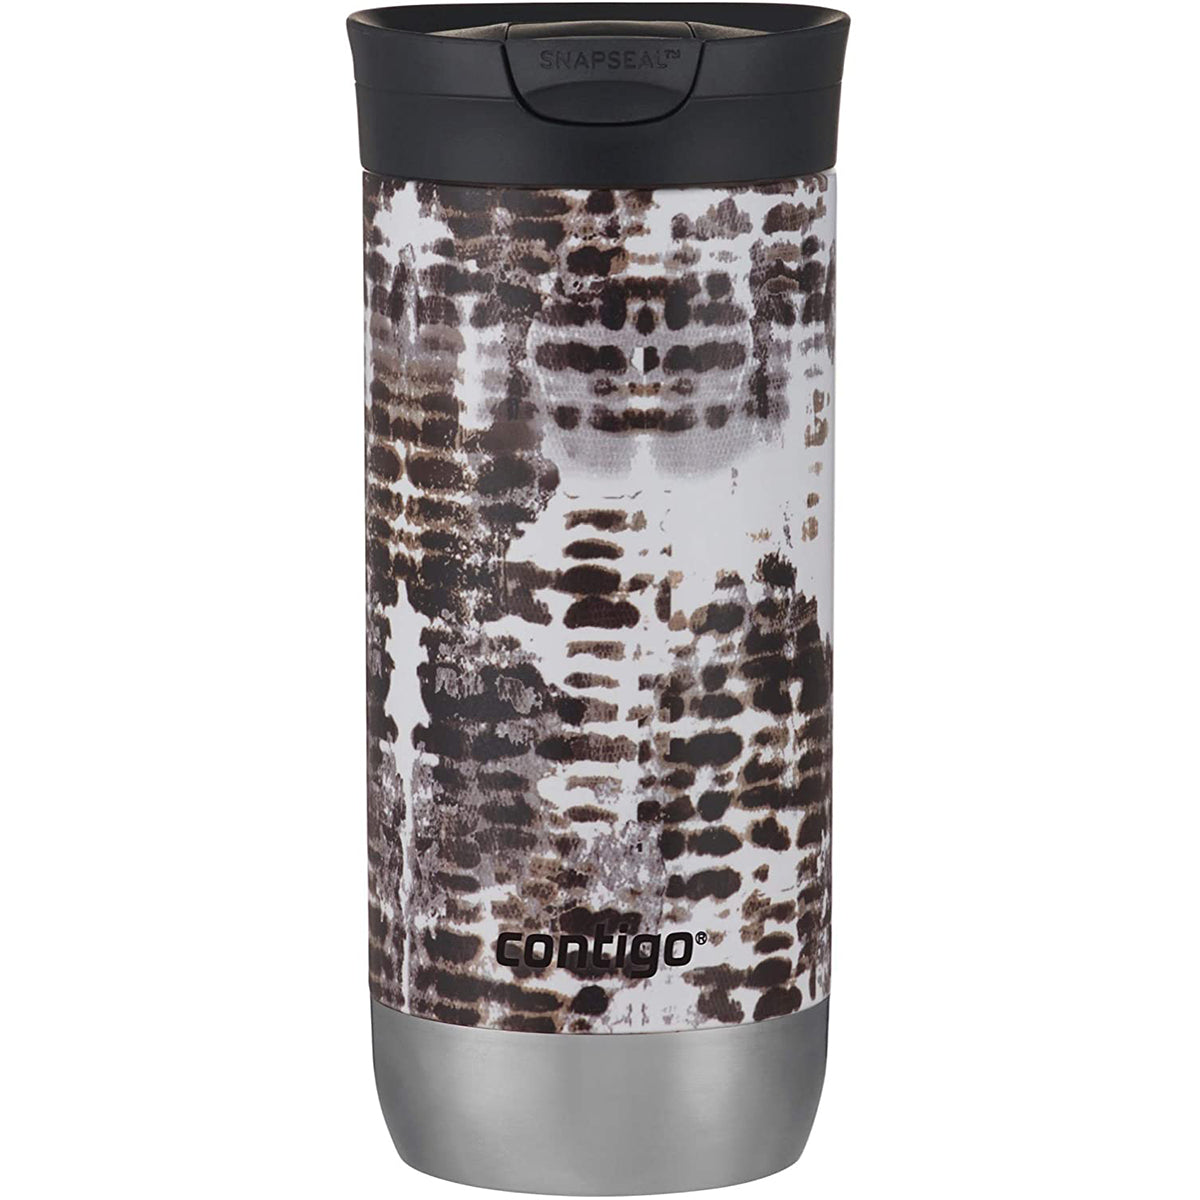 Contigo 16 oz. Huron 2.0 Couture SnapSeal Insulated Stainless Steel Travel Mug Contigo